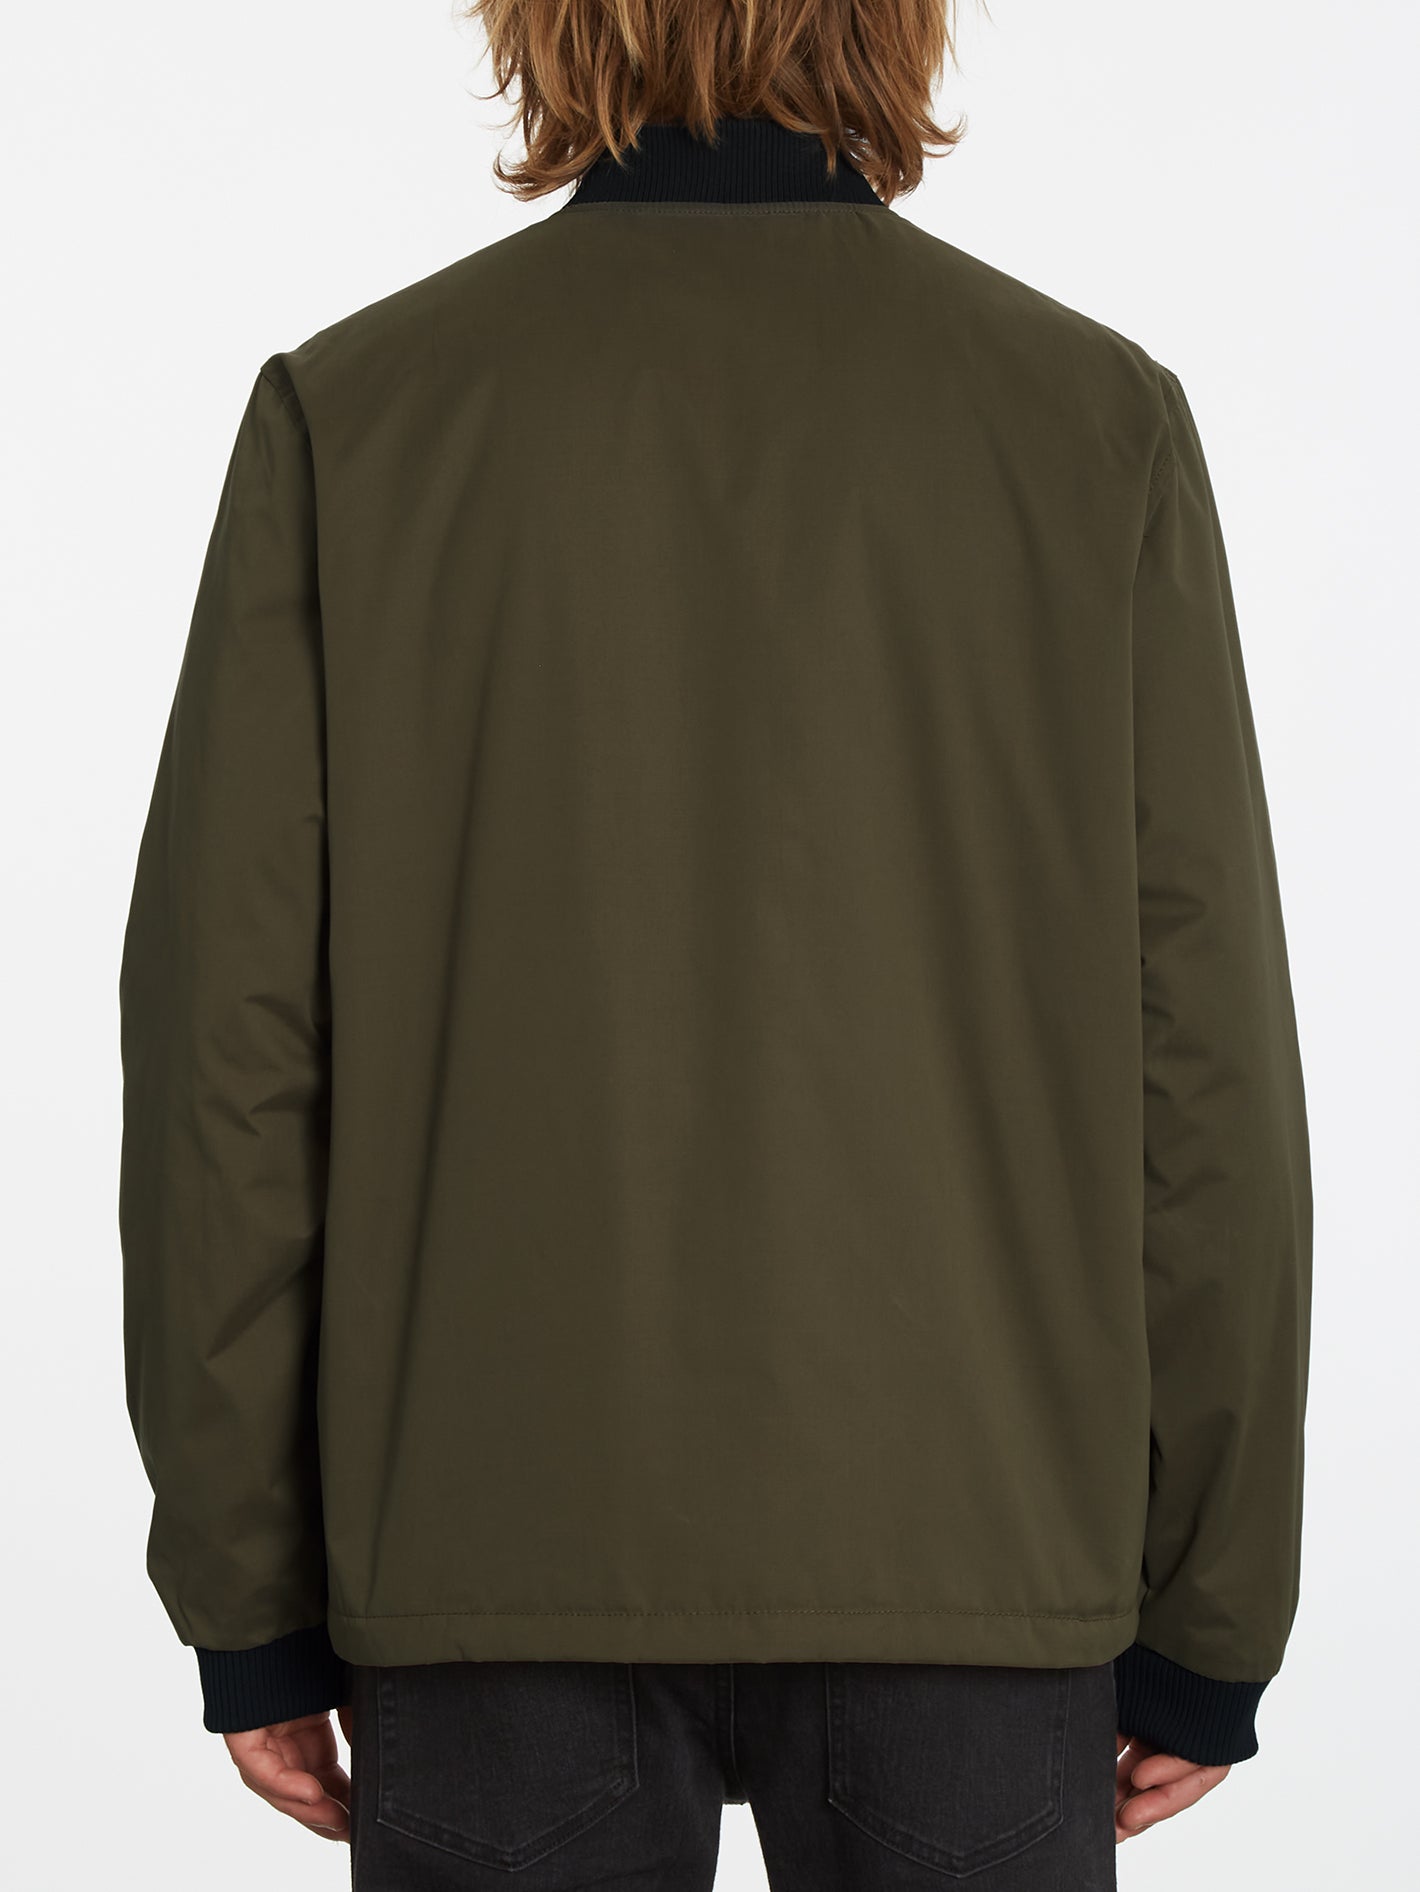 Lookster Jacket - Service Green – Volcom US